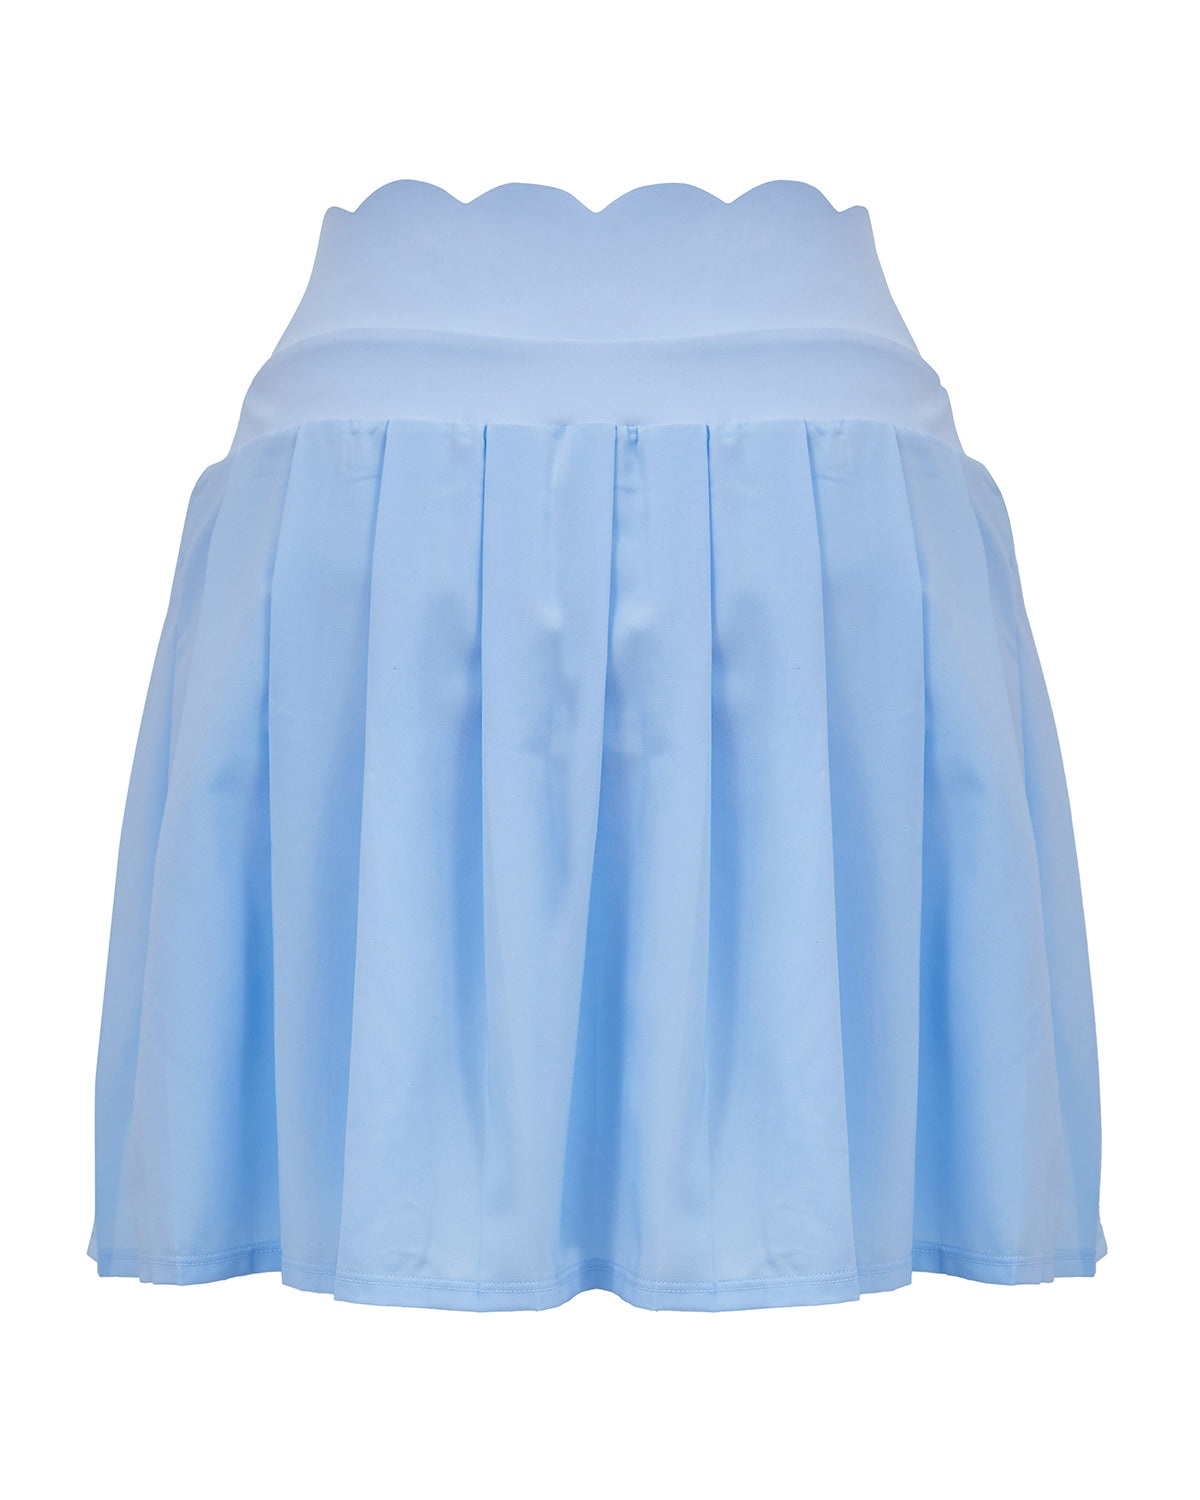 Endear Skirt in Baby Blue